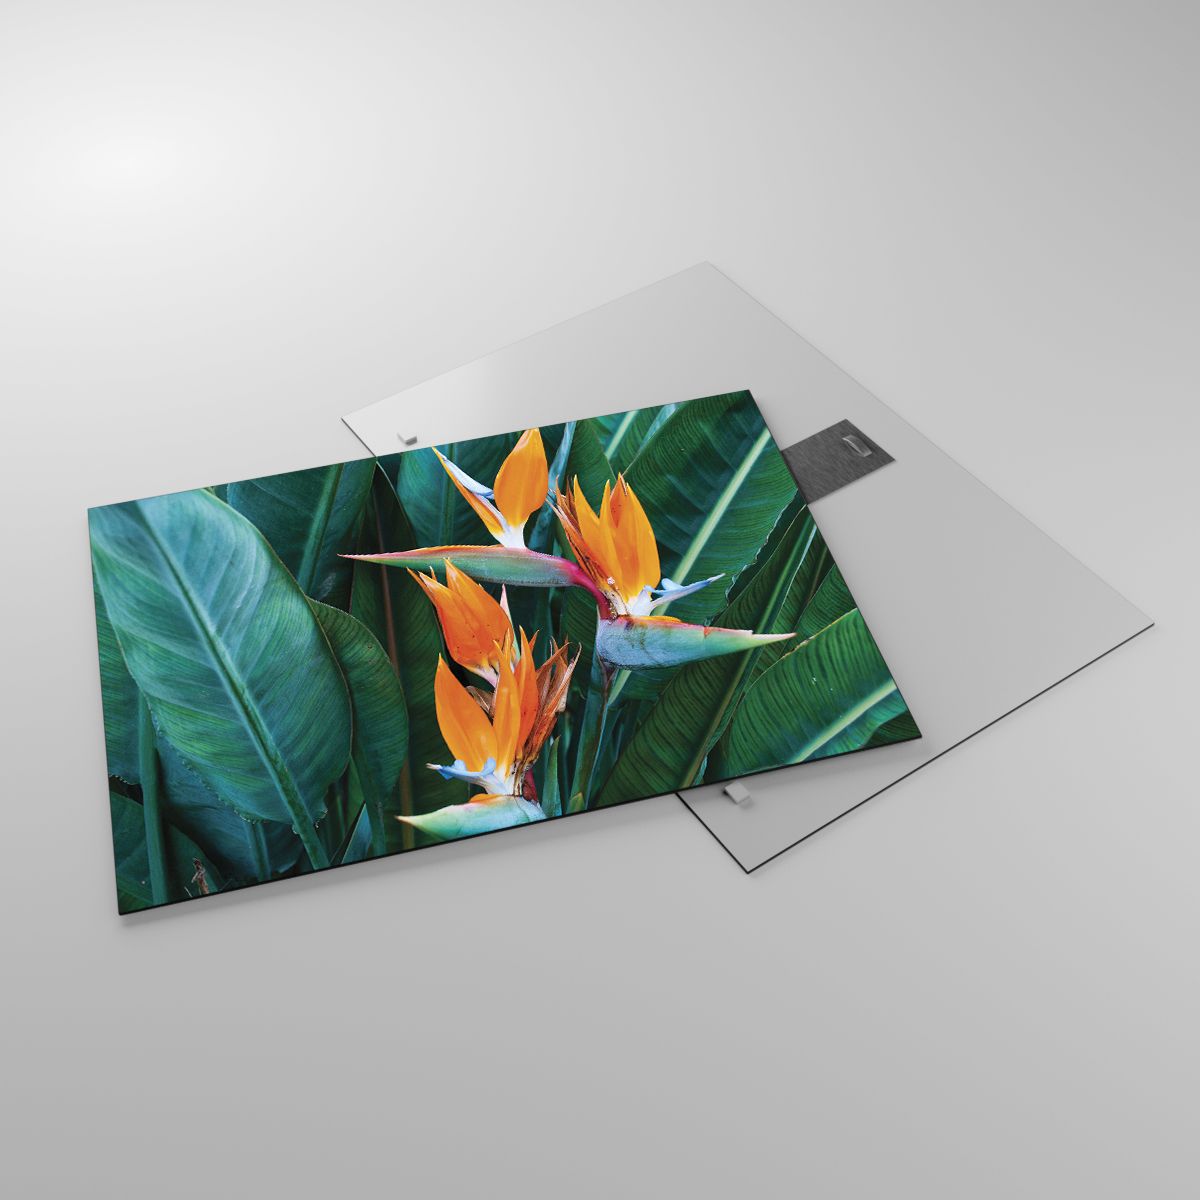 Glasbild Königliche Strelitzie, Glasbild Blume, Glasbild Afrika, Glasbild Tropen, Glasbild Exotische Pflanze